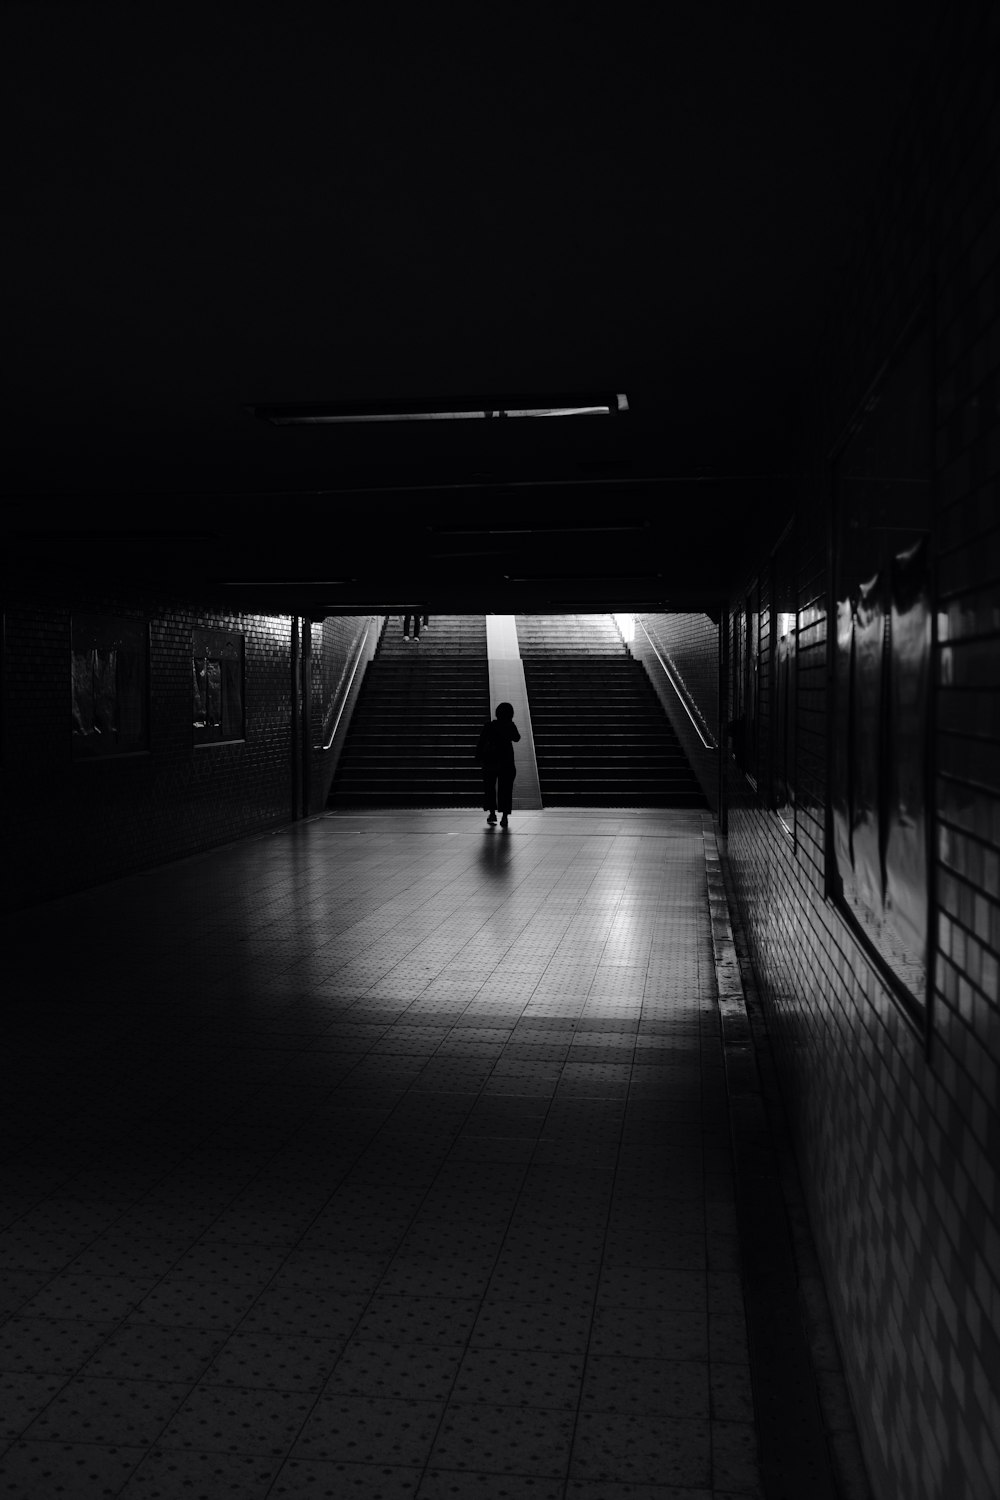 a person standing alone in a dark hallway